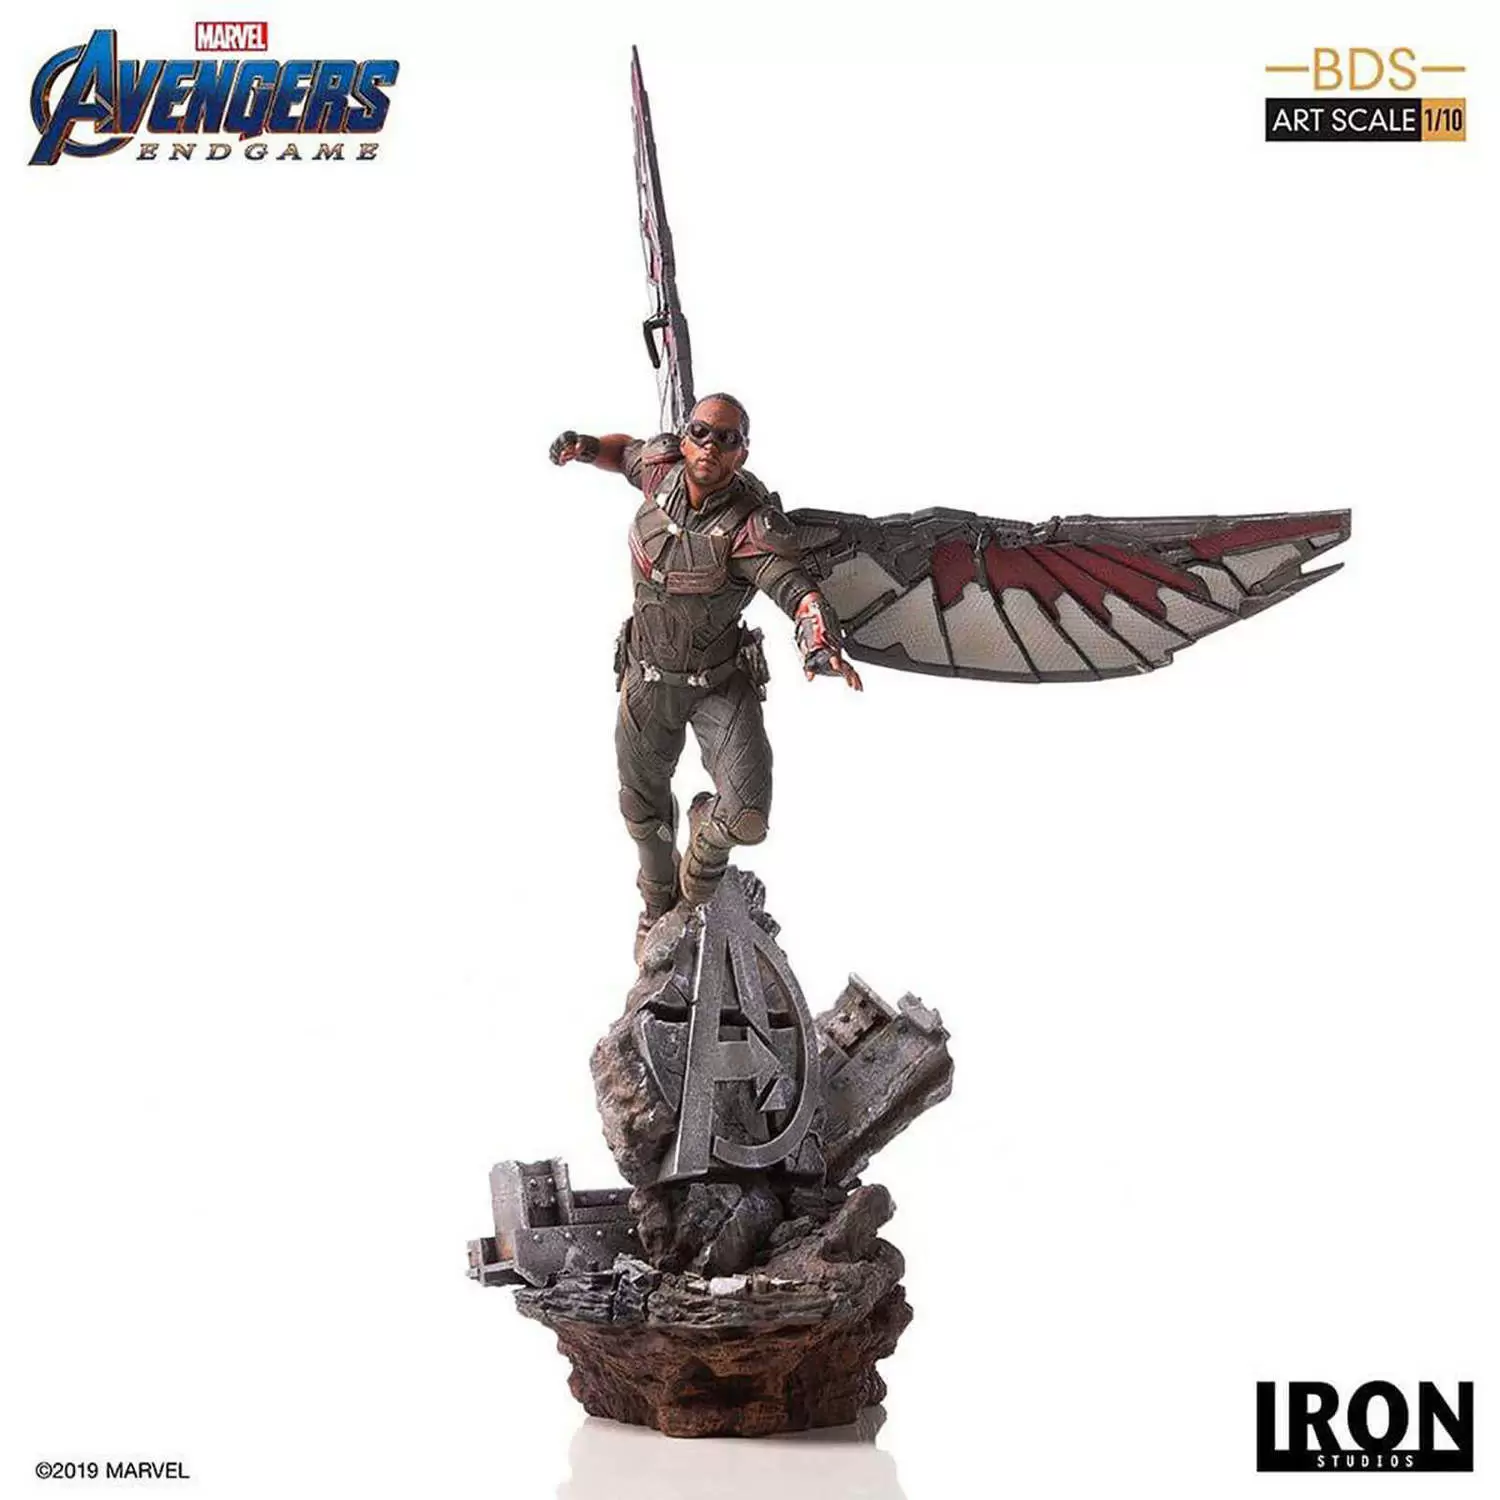 Iron Studios - Avengers: Endgame - Falcon - BDS Art Scale 